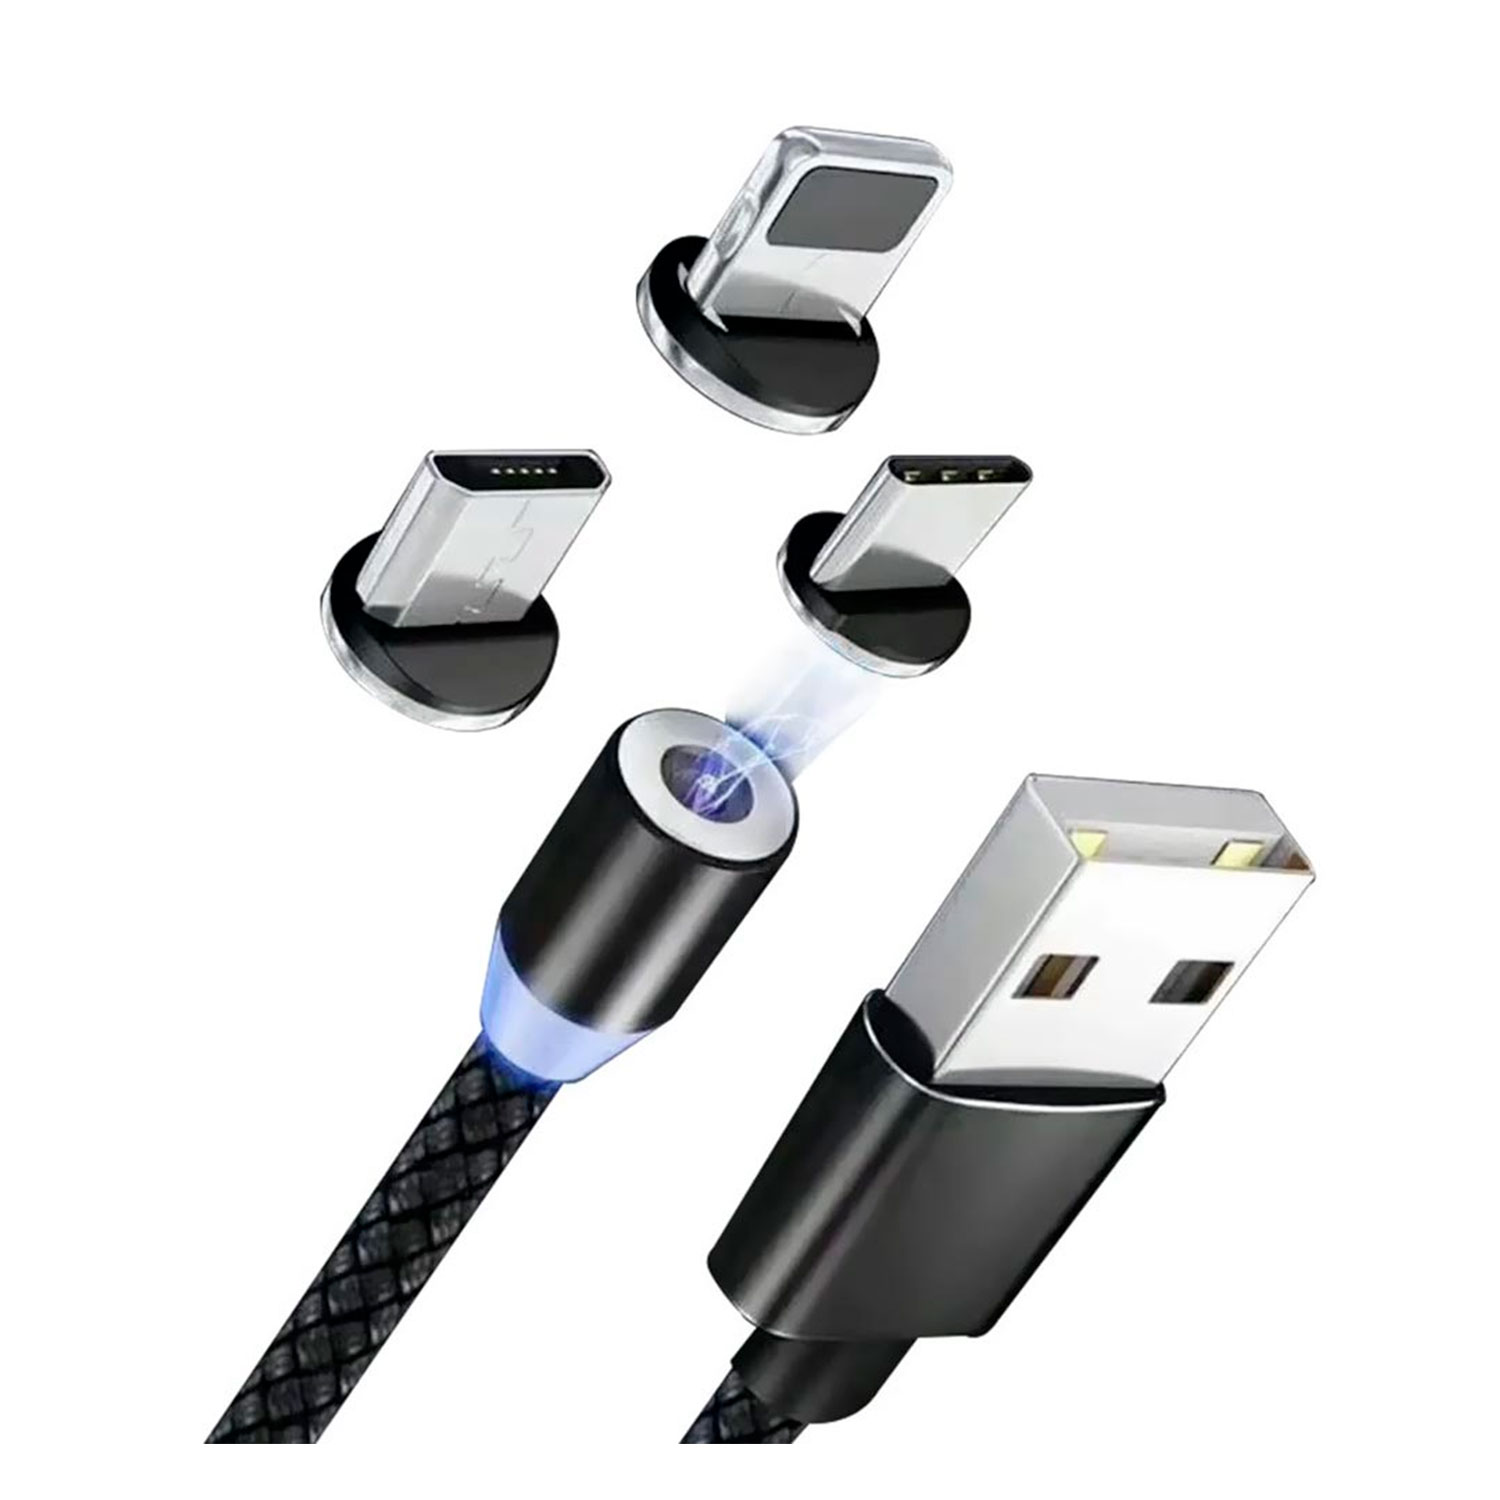 Cabo Magnético Smartzla USB 2.0 a Lightning Type-C Micro USB SAT-C005 1M - Preto
